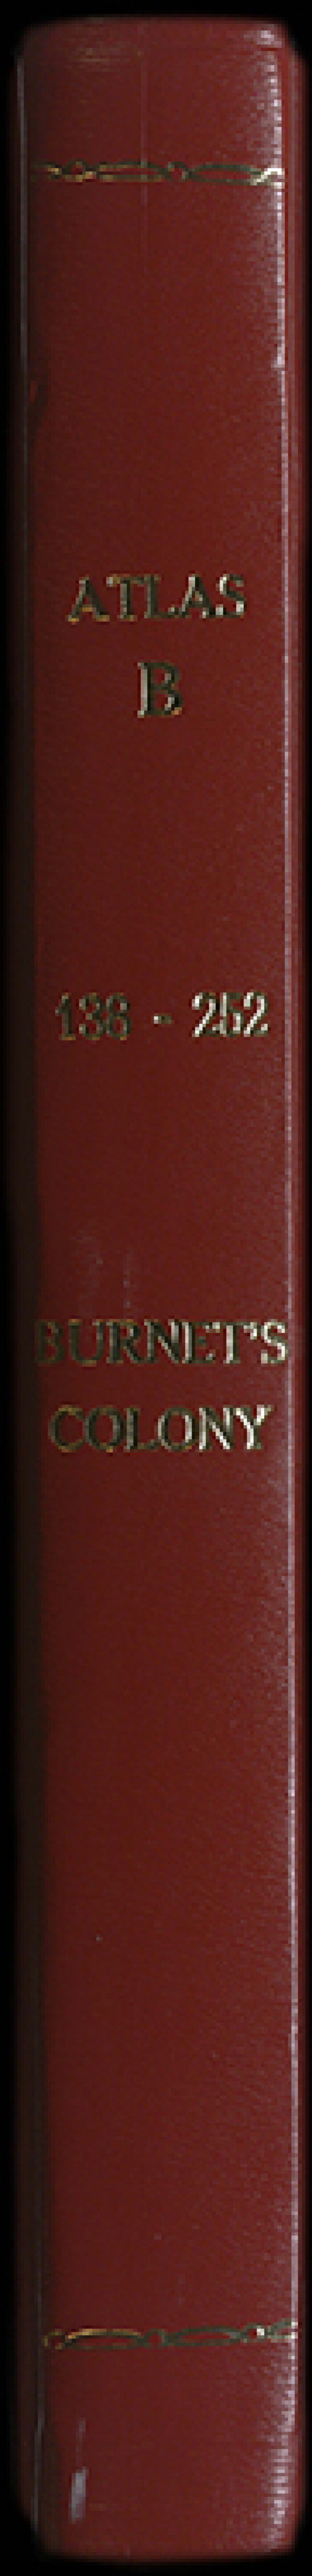 94538, Atlas B, 138-252, Burnet's Colony, Historical Volumes